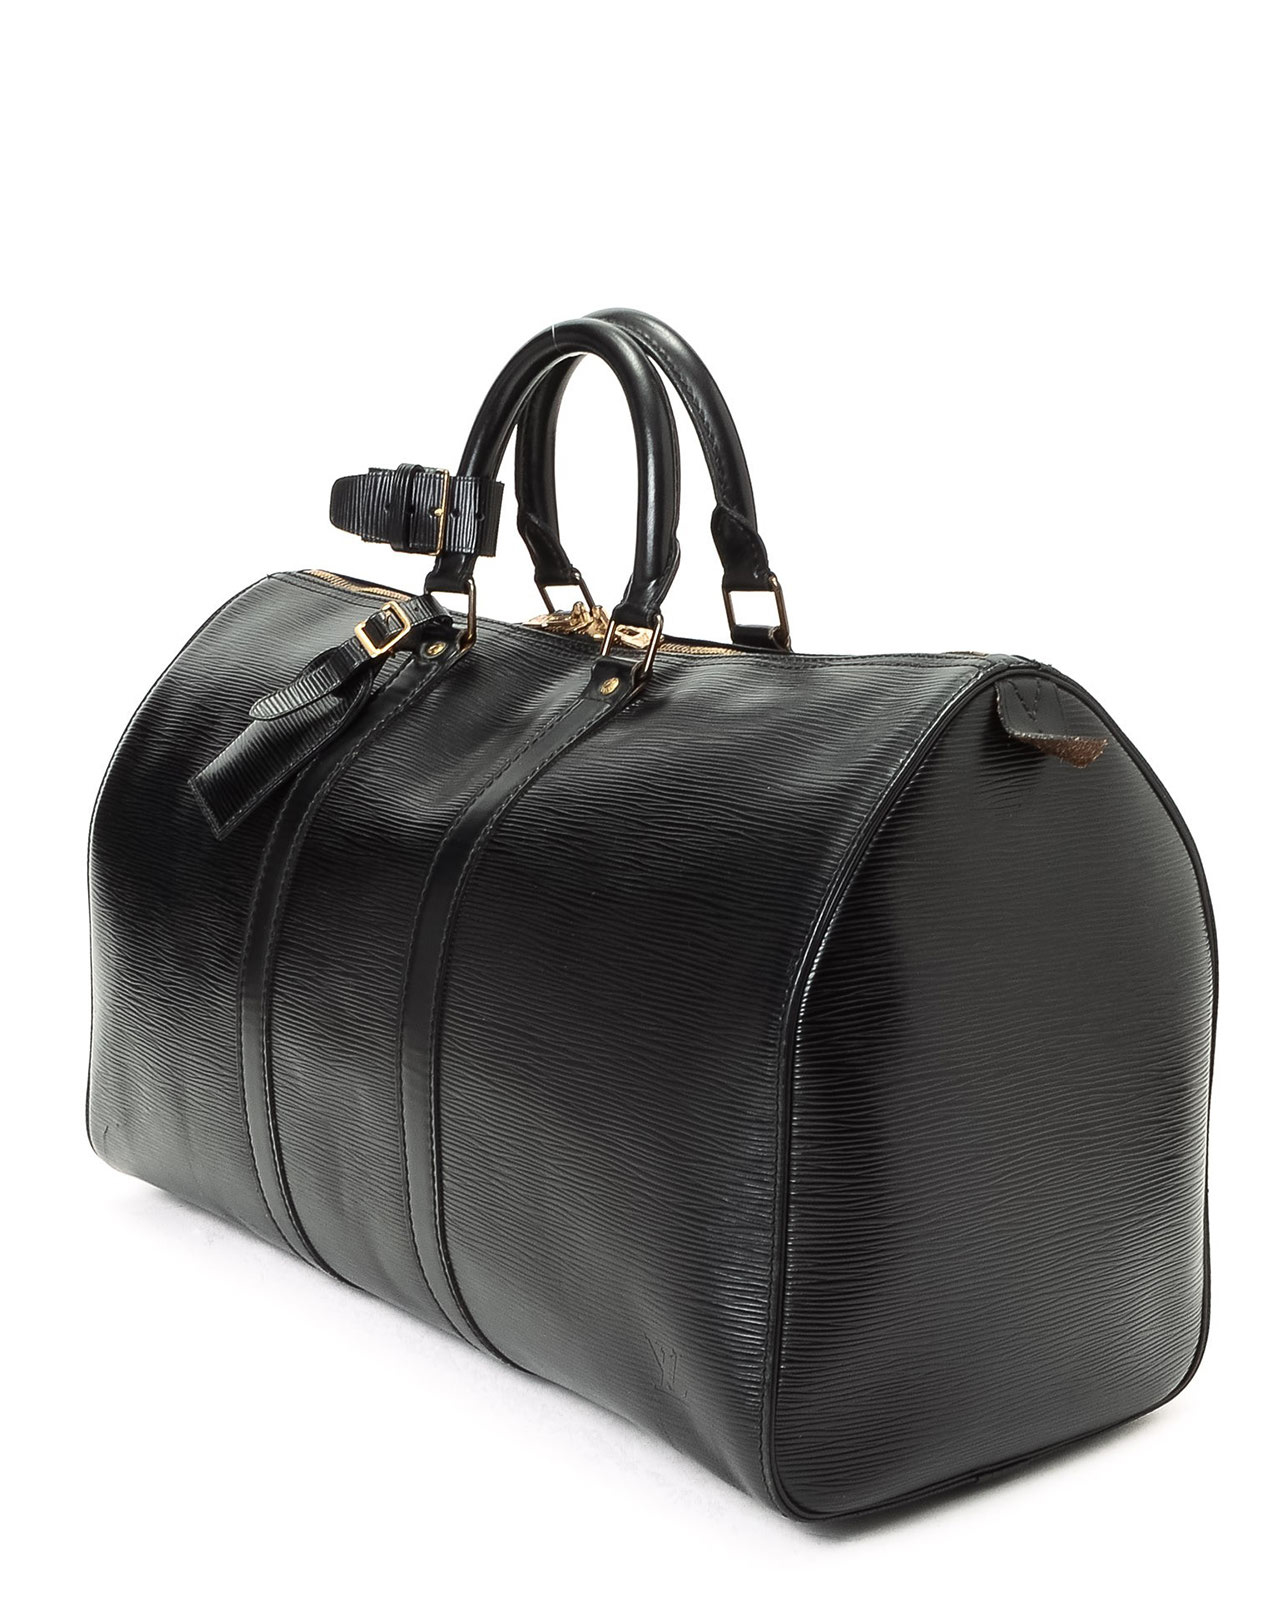 Louis Vuitton Black Keepall 45 Bag for Men - Lyst